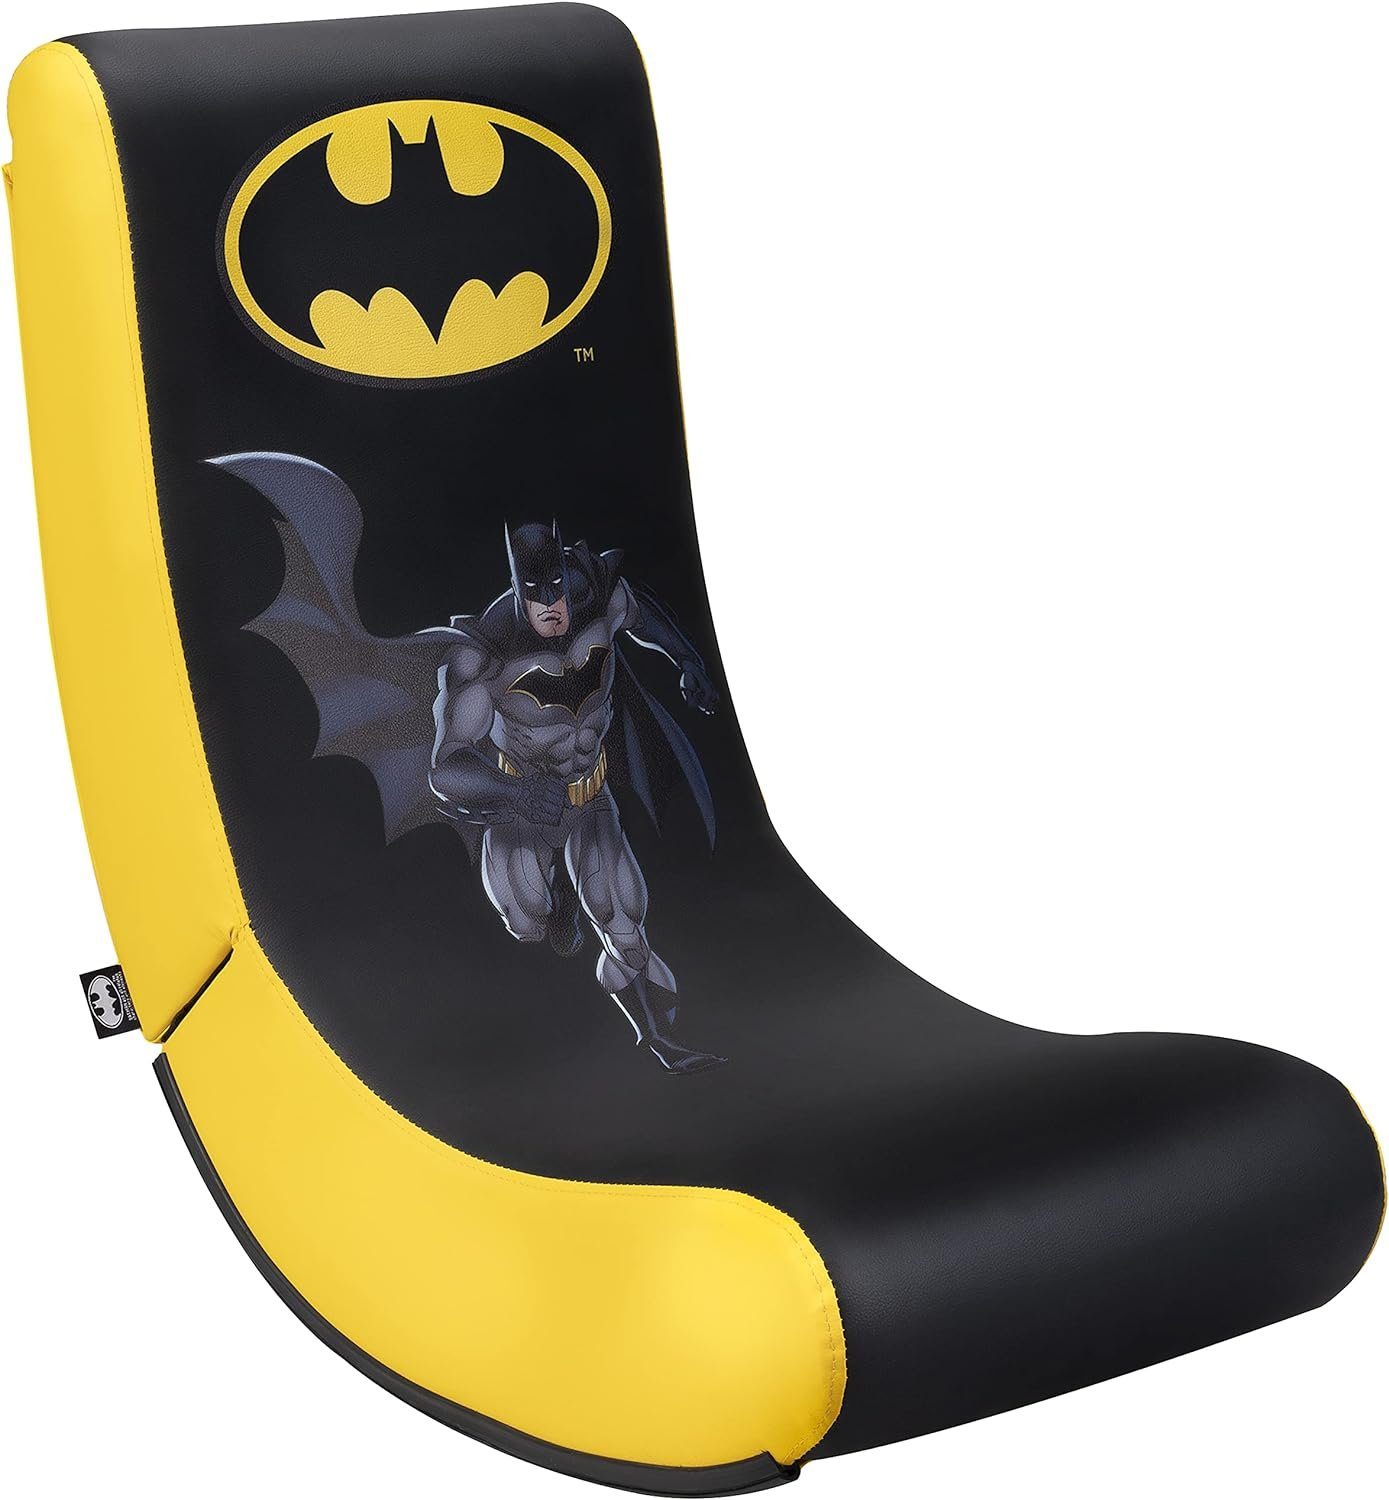 Subsonic Gaming-Stuhl Batman - Rock'n'seat Junior Gaming Stuhl / Chair (1 St)